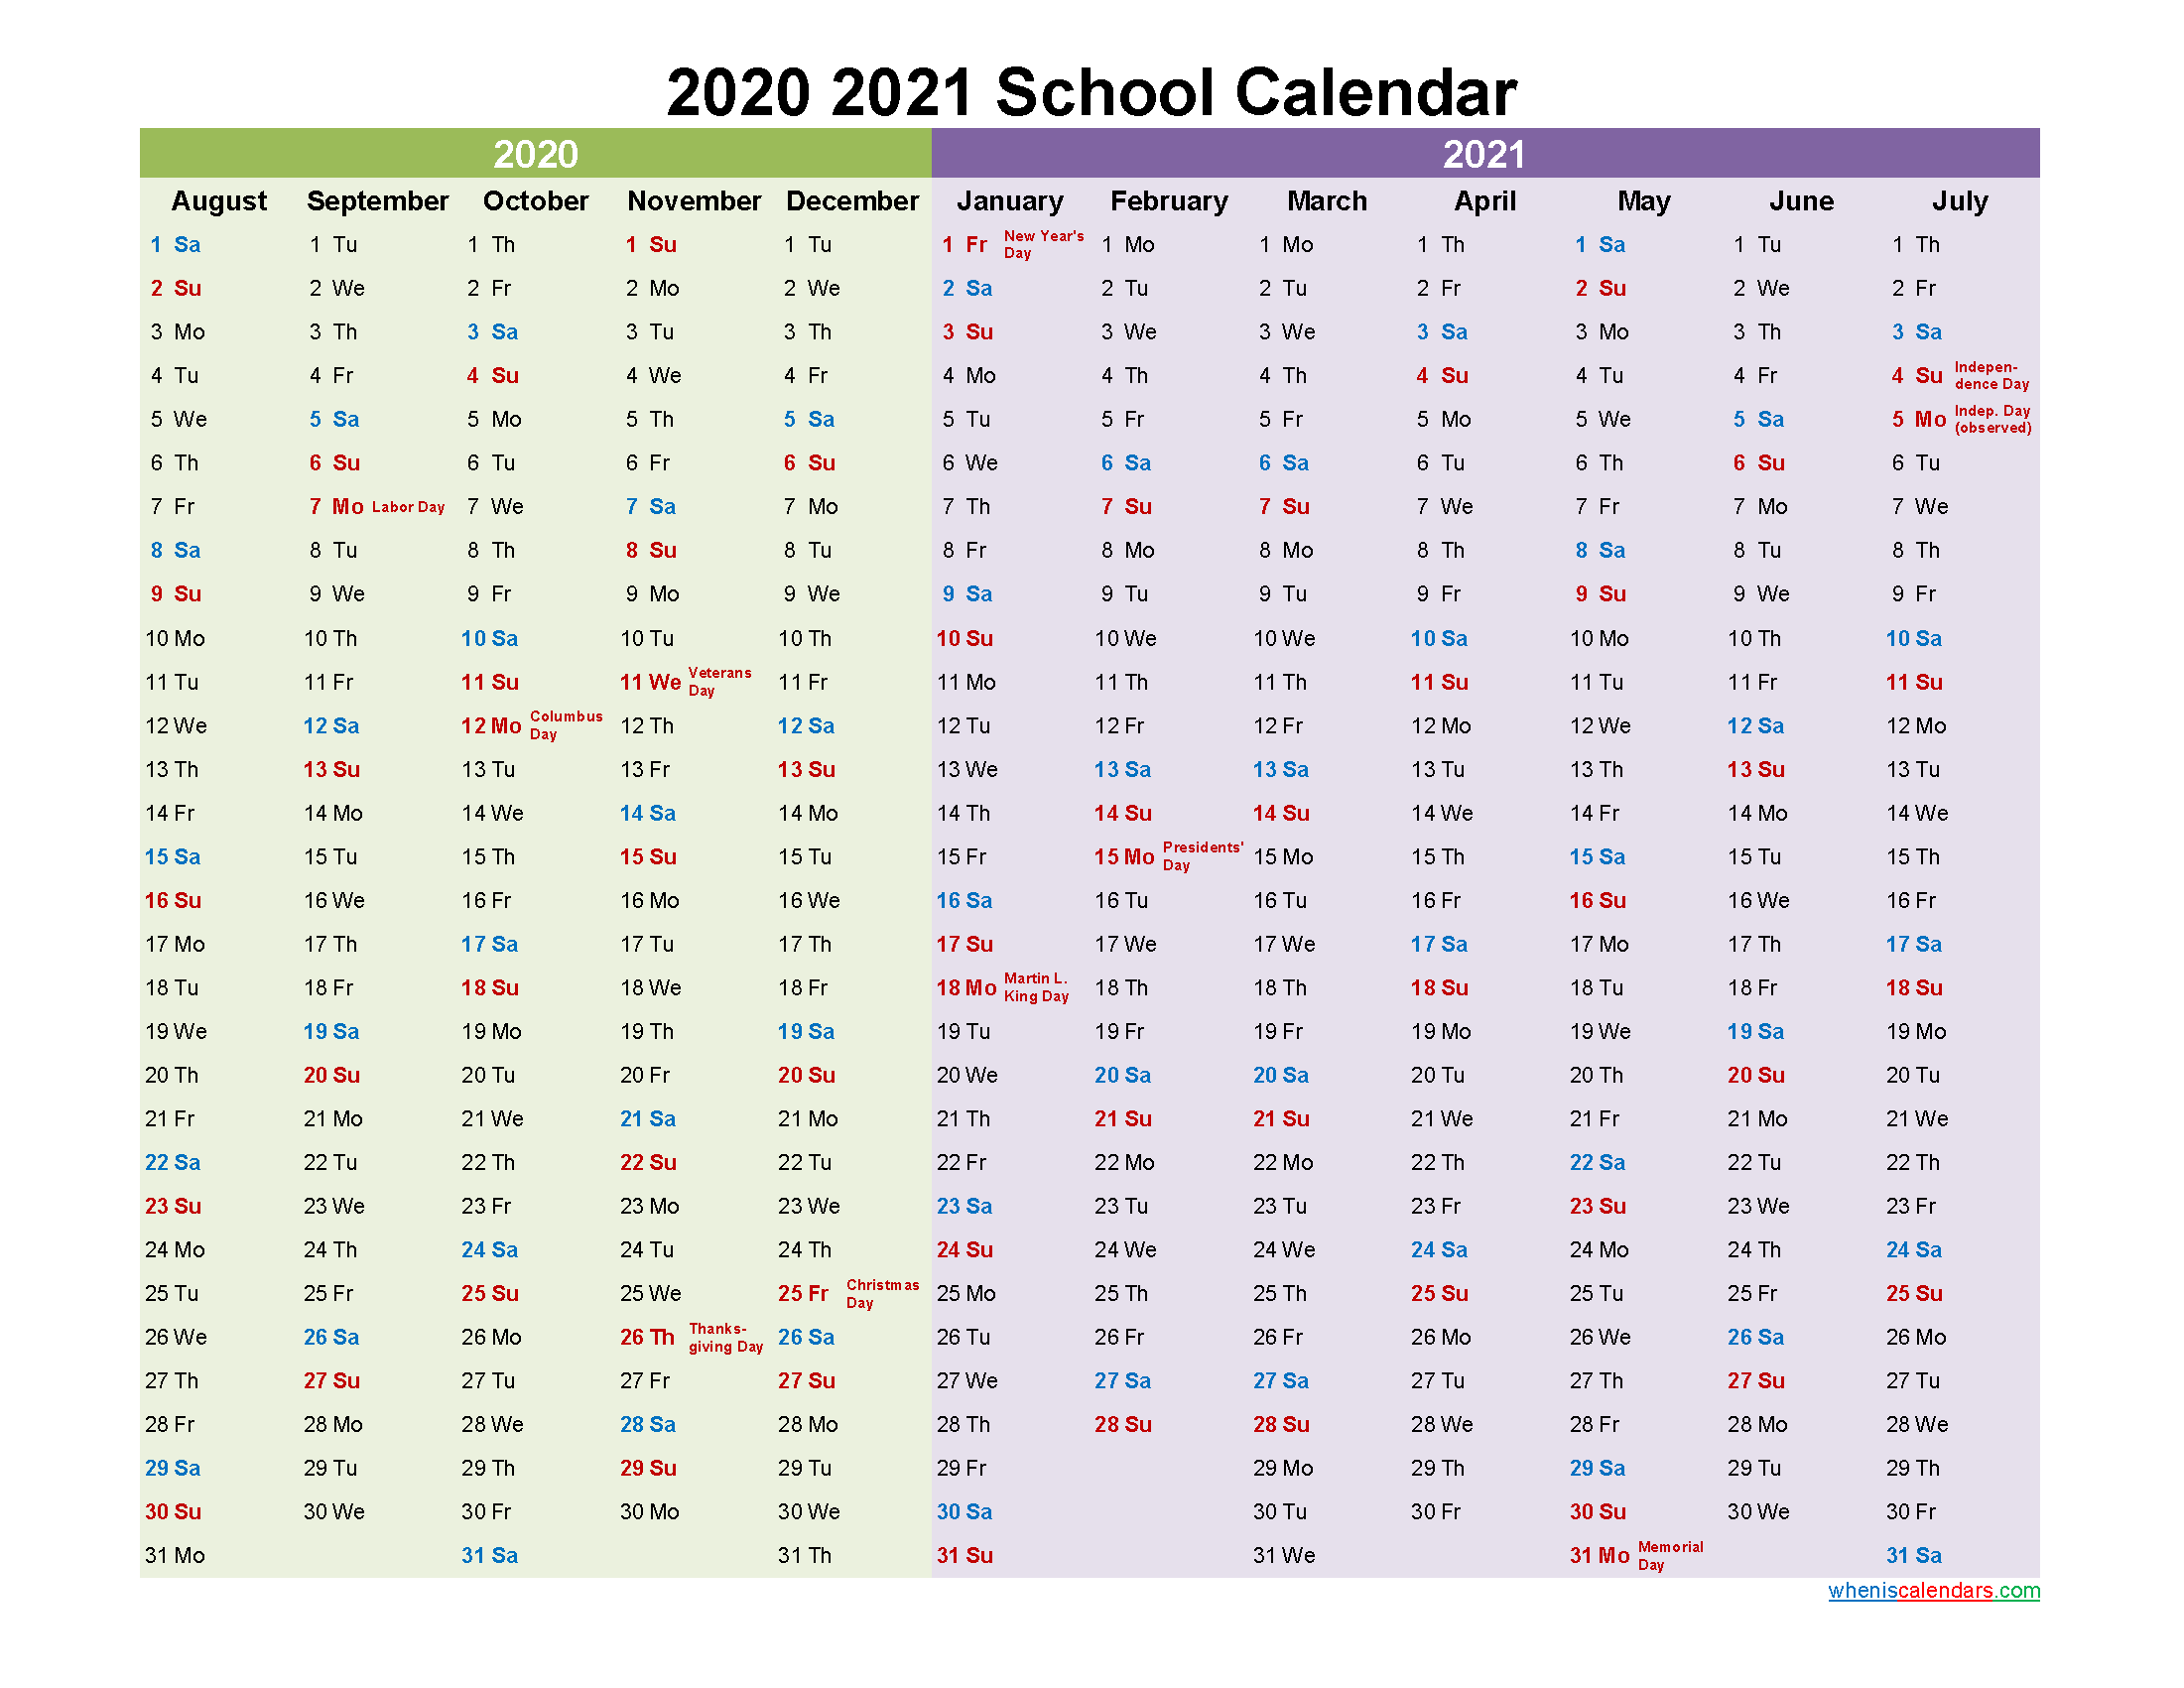 2020 and 2021 School Calendar Printable - Template No.21scl44